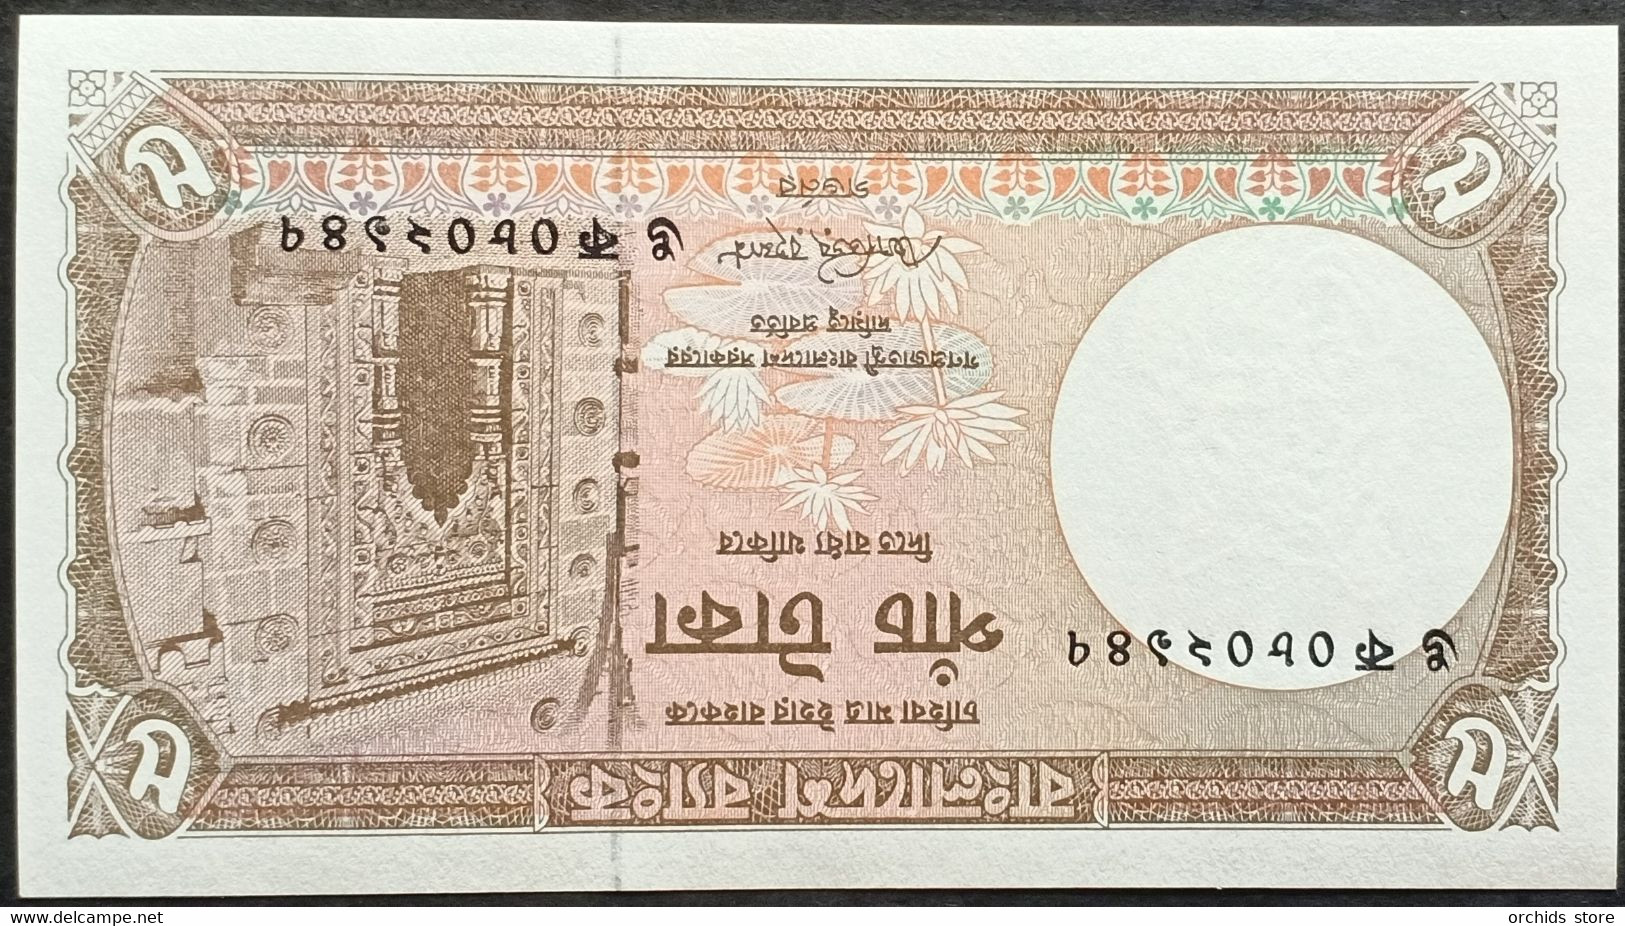 HM0325 - Bangladesh 2009 5 Taka Banknote P-46Ab.2 UNC - Korea, South